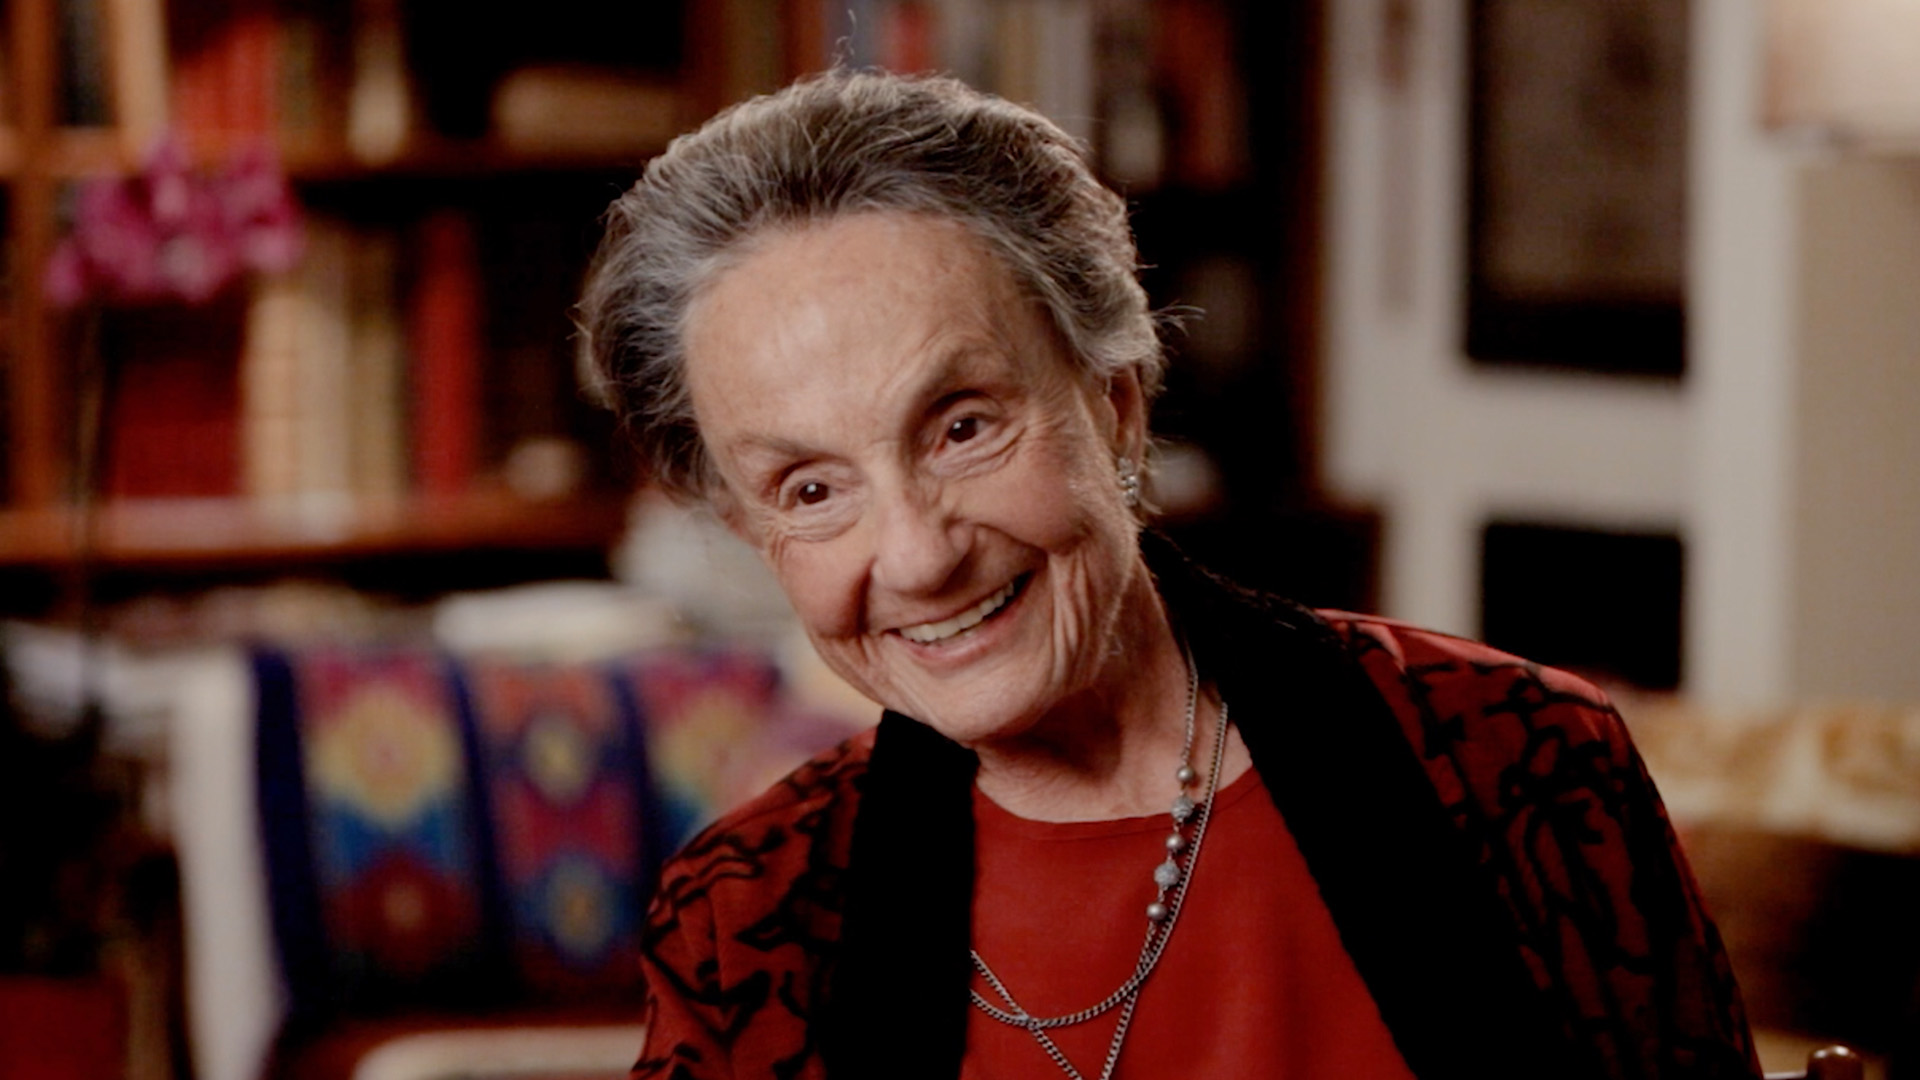 Color film still of older woman (Mara Vishniac Kohn) smiling.